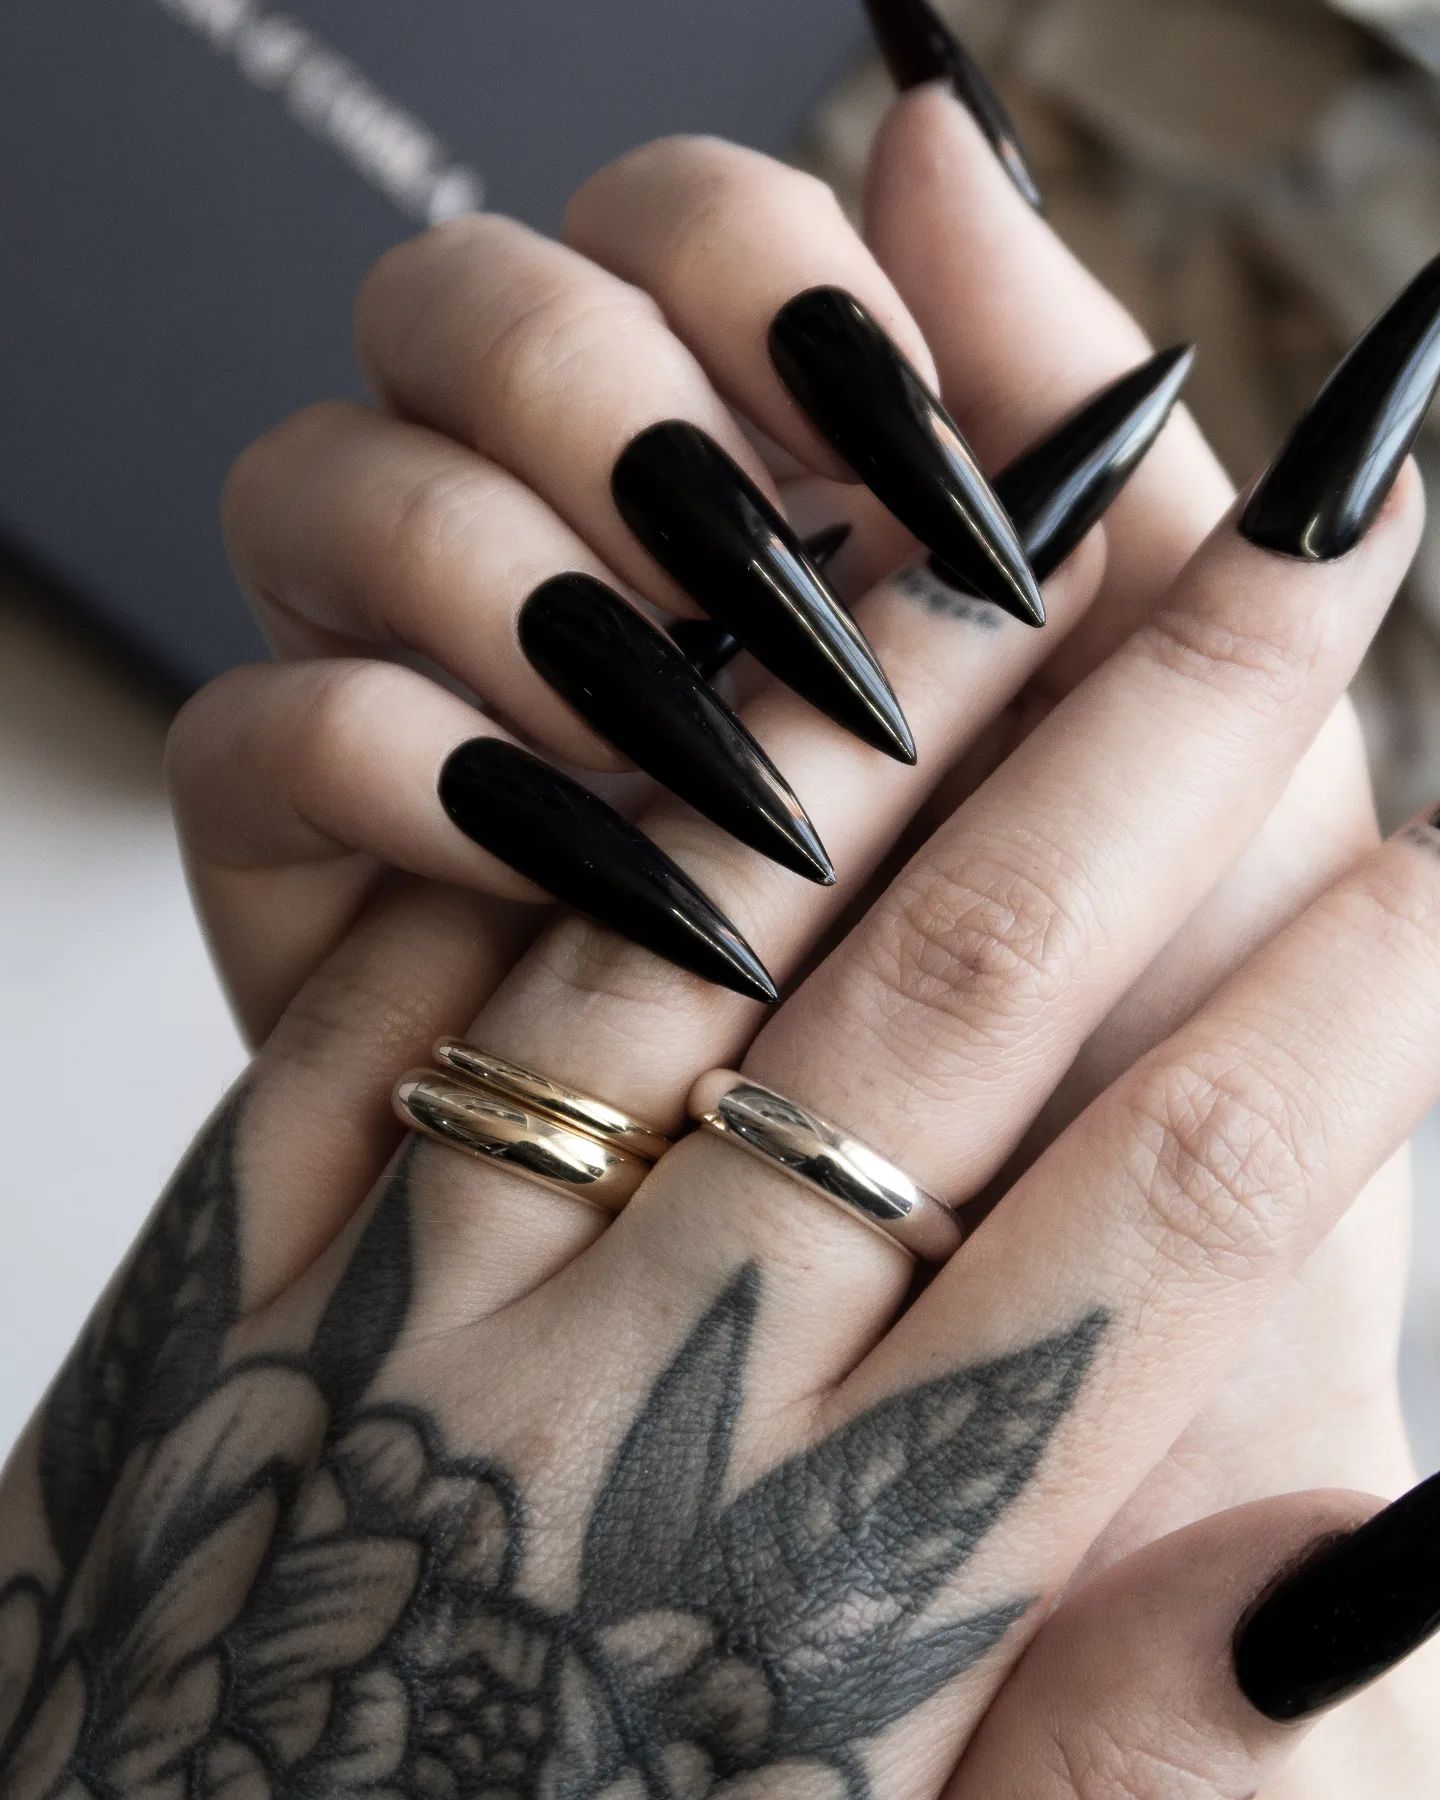 Classic black goth nails